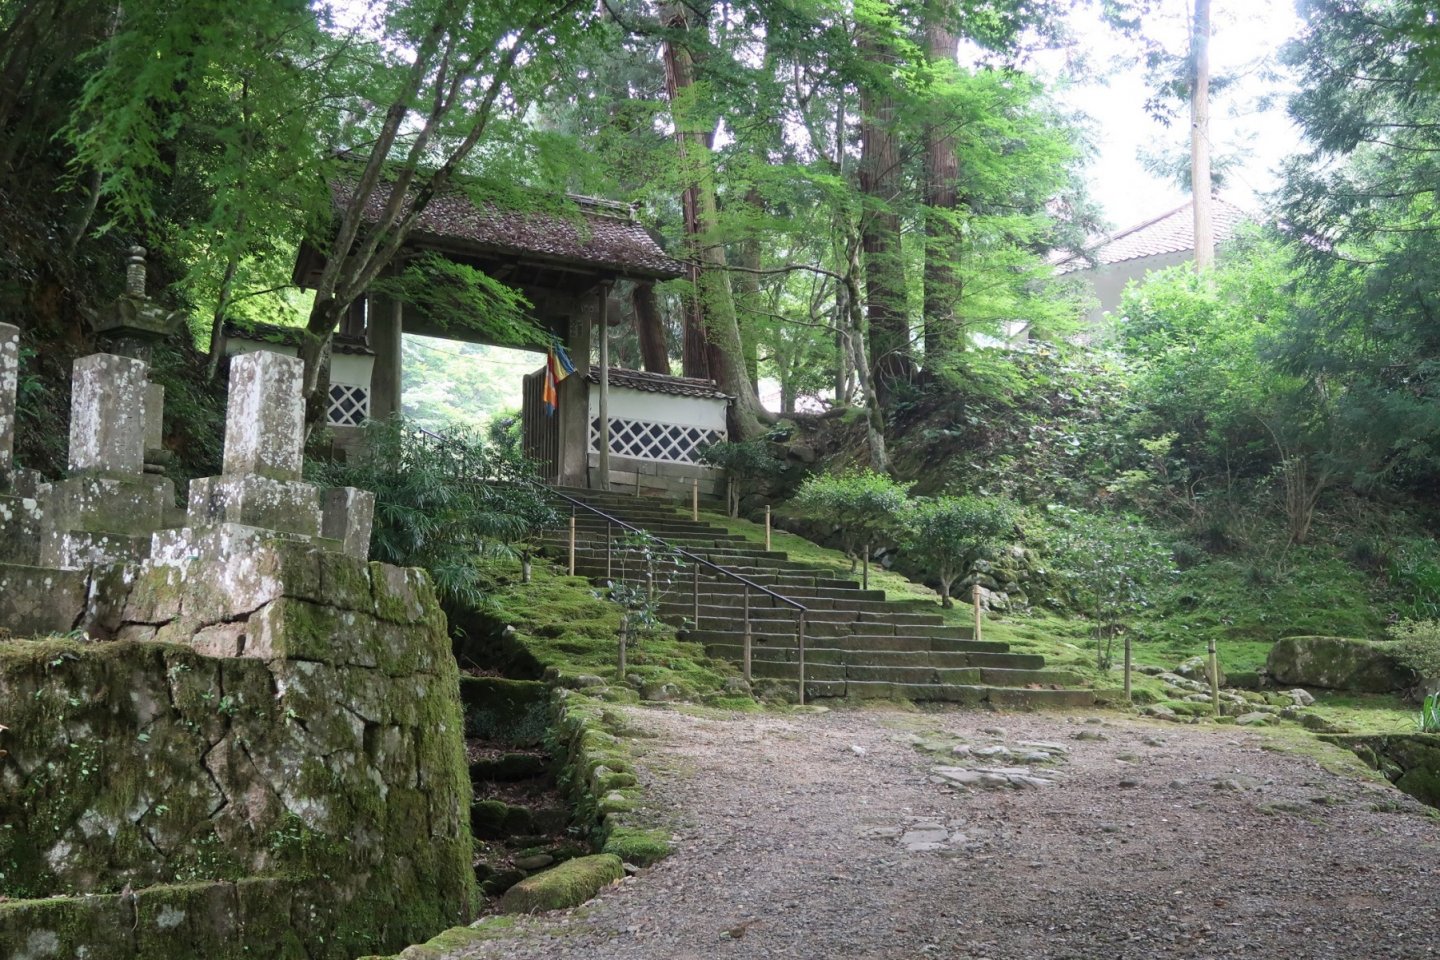 Entrance to Youmeij (previously the border gate to the samurai town)